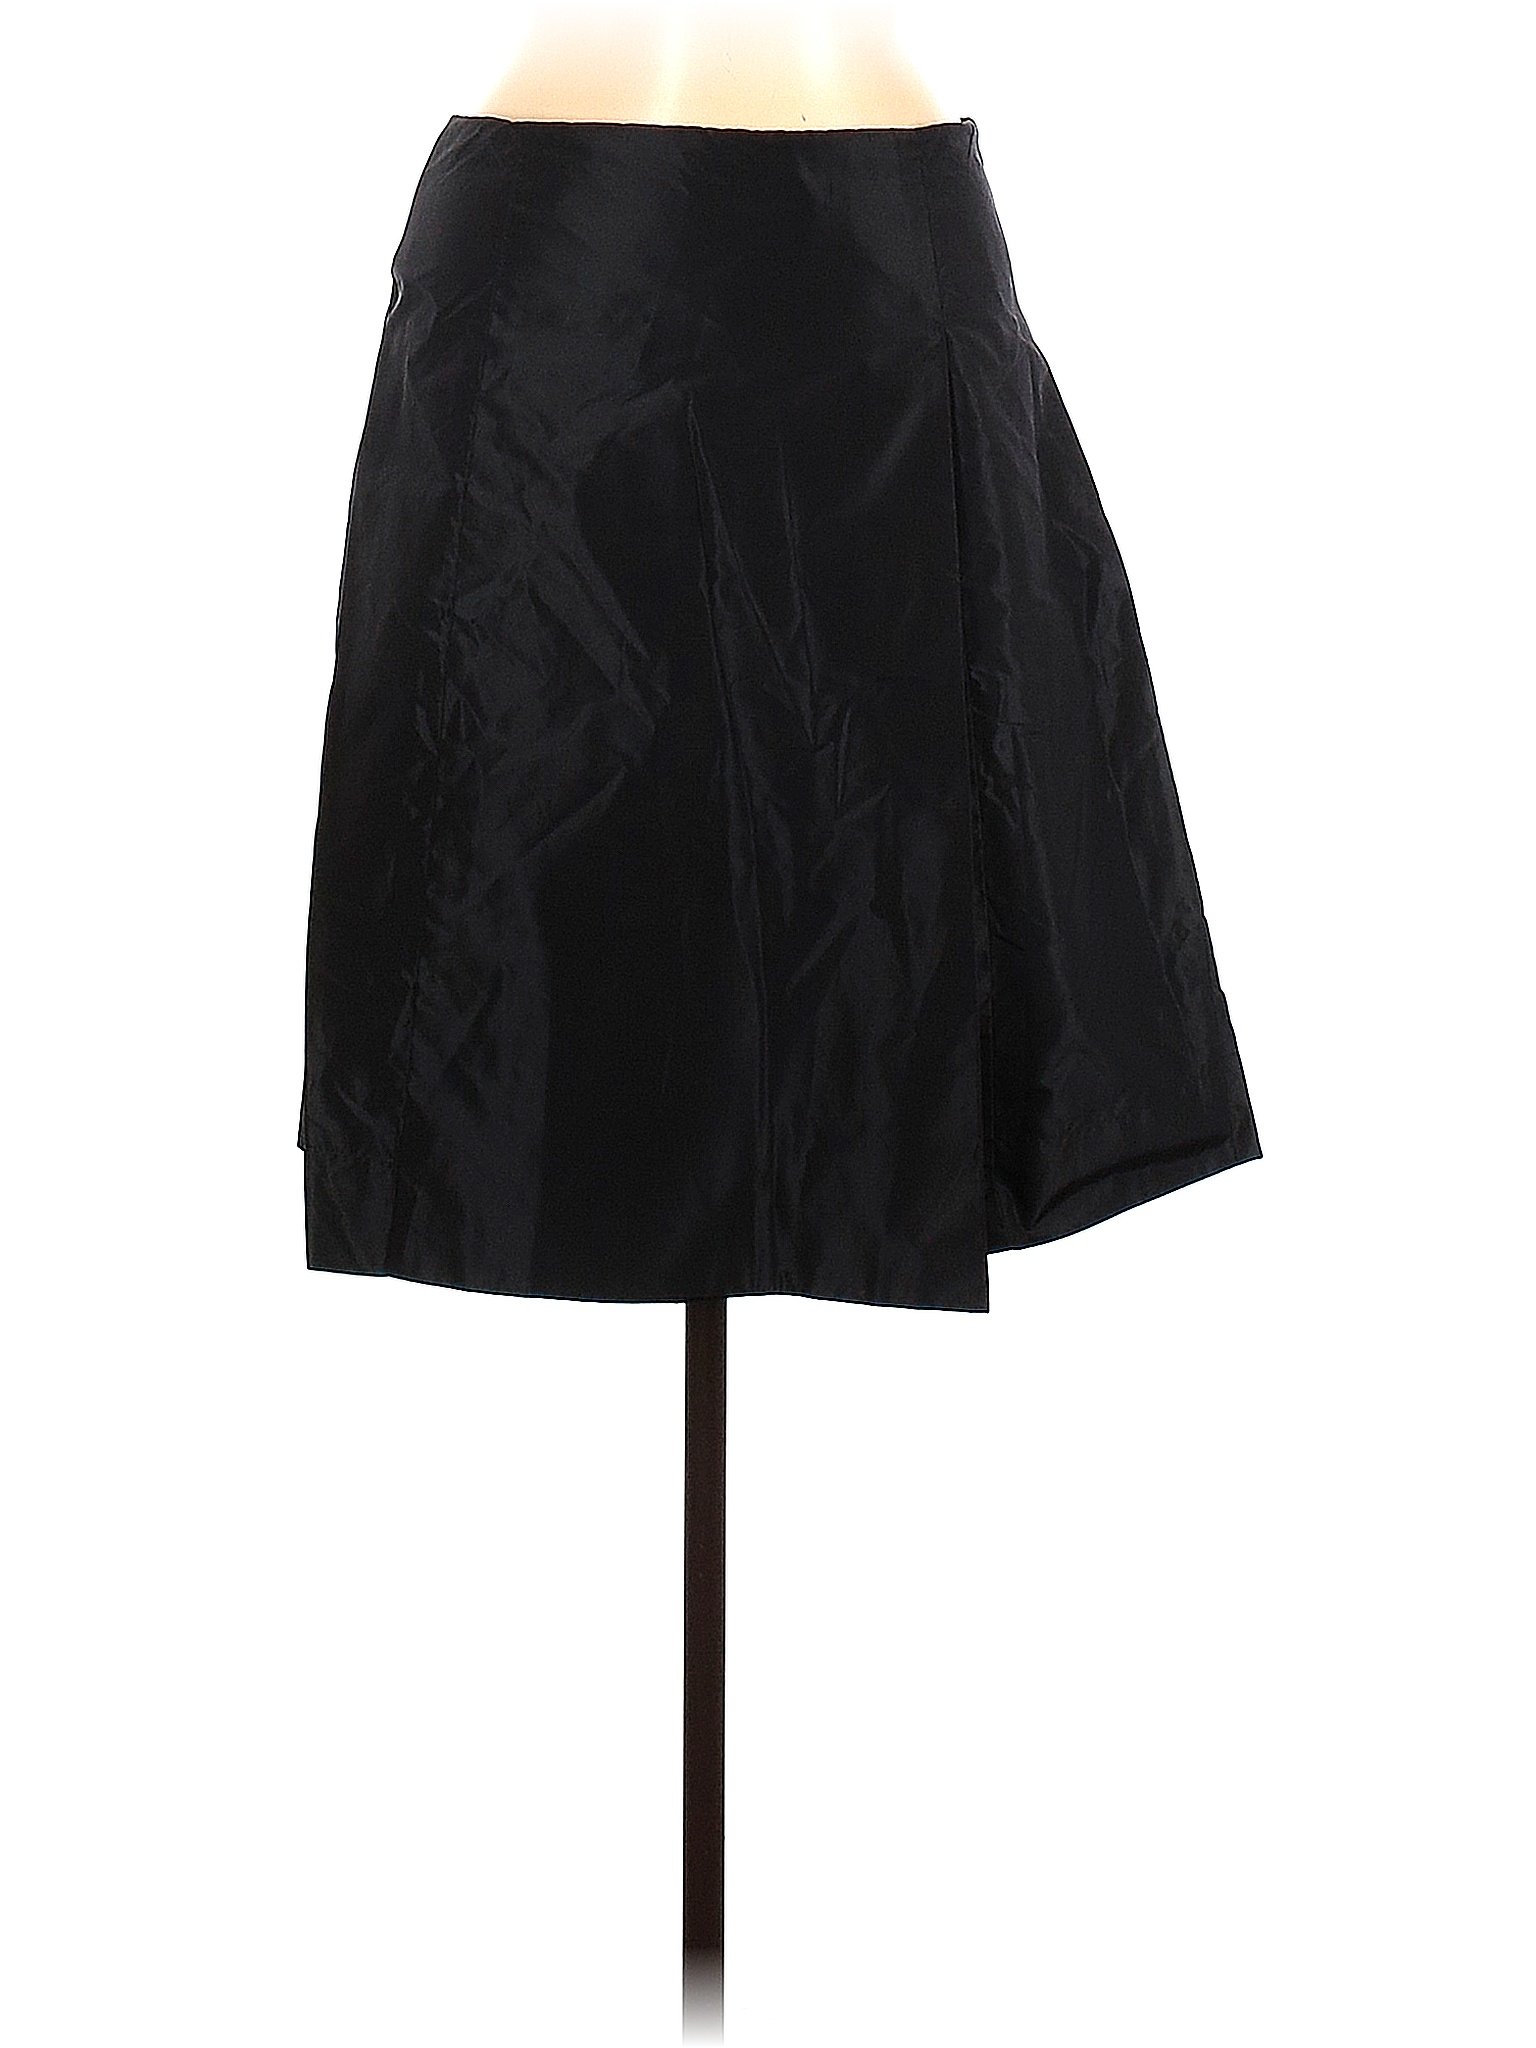 AKRIS 100% Silk Solid Black Silk Skirt Size 8 - 94% off | thredUP